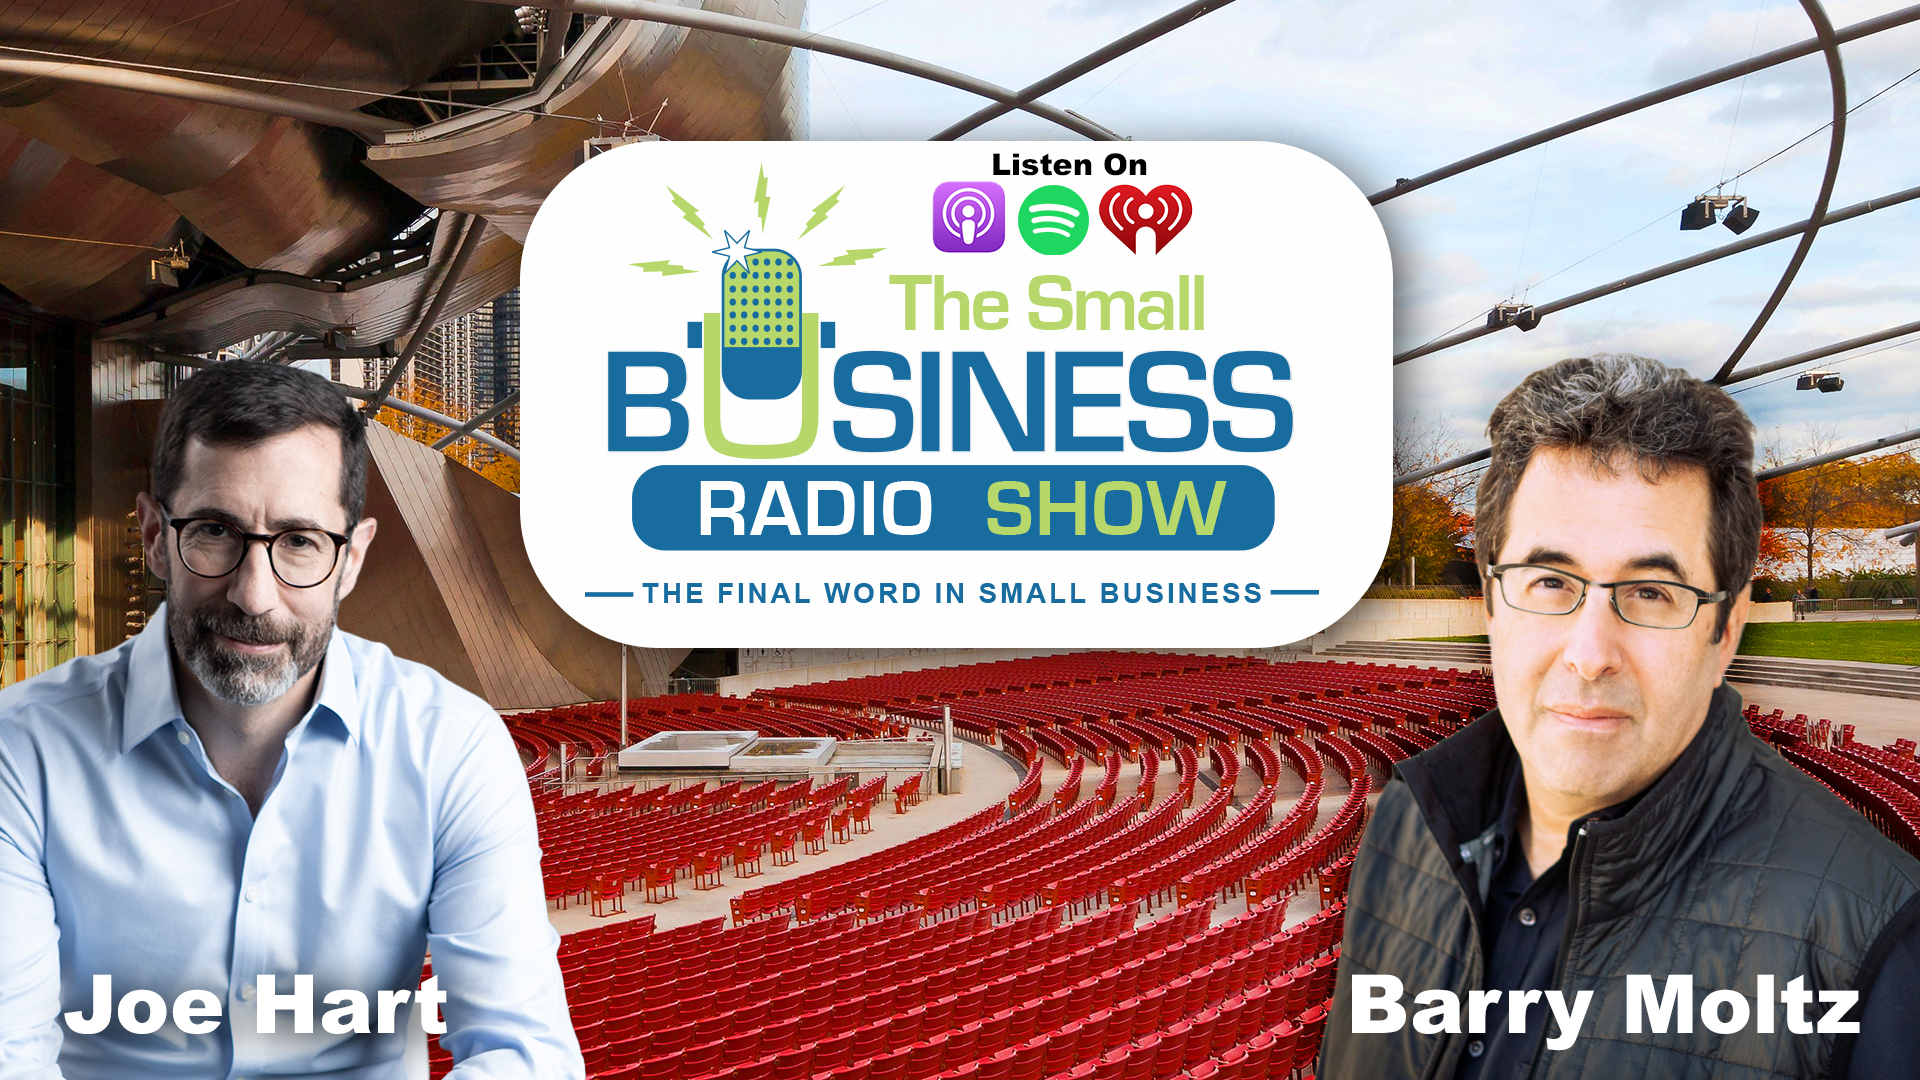 Joe Hart on The Small Business Radio Show